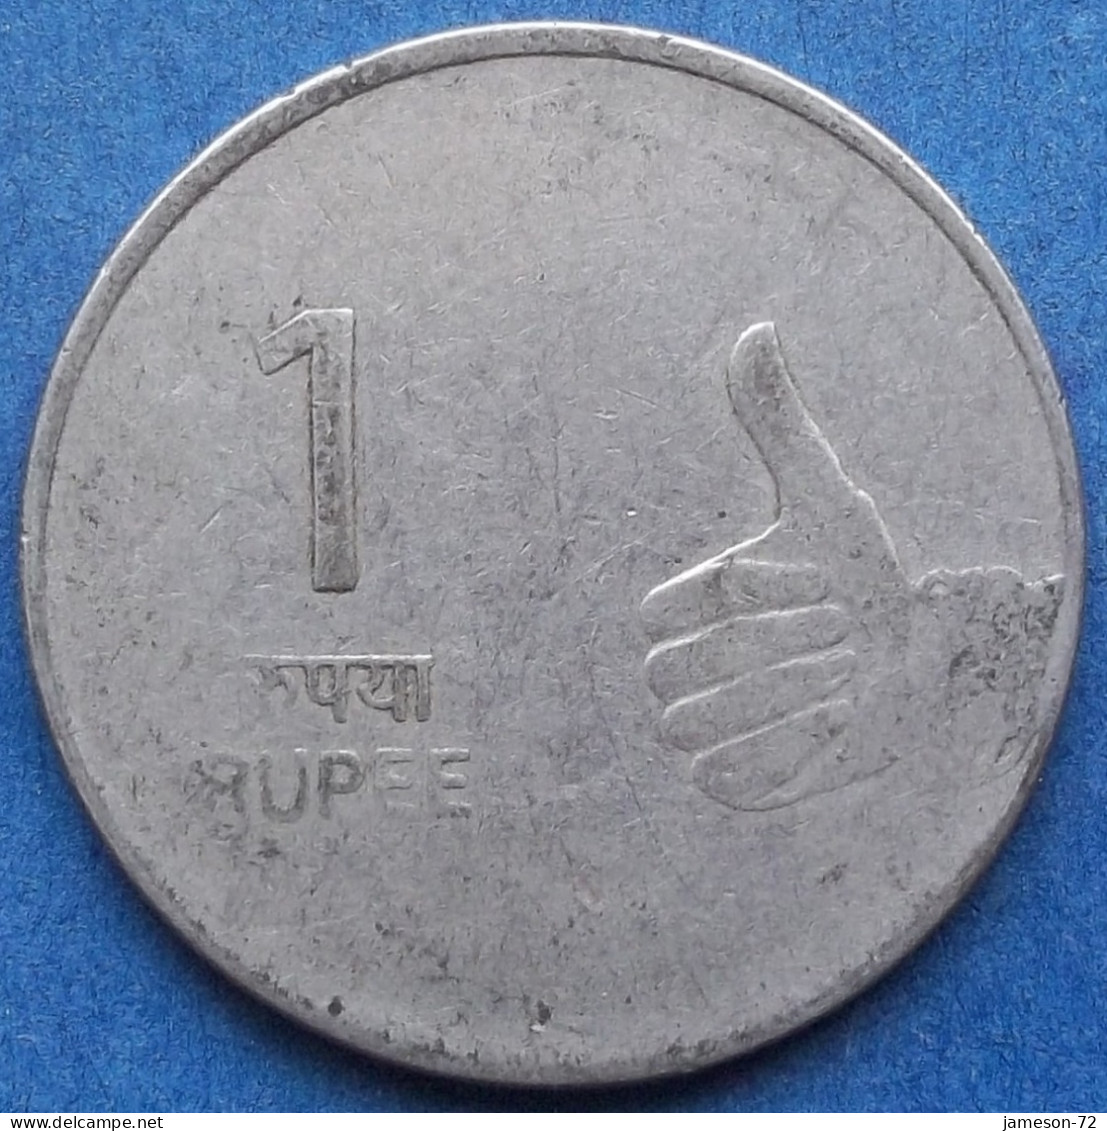 INDIA - 1 Rupee 2010 KM# 331 Republic Decimal Coinage (1957) - Edelweiss Coins - Georgien